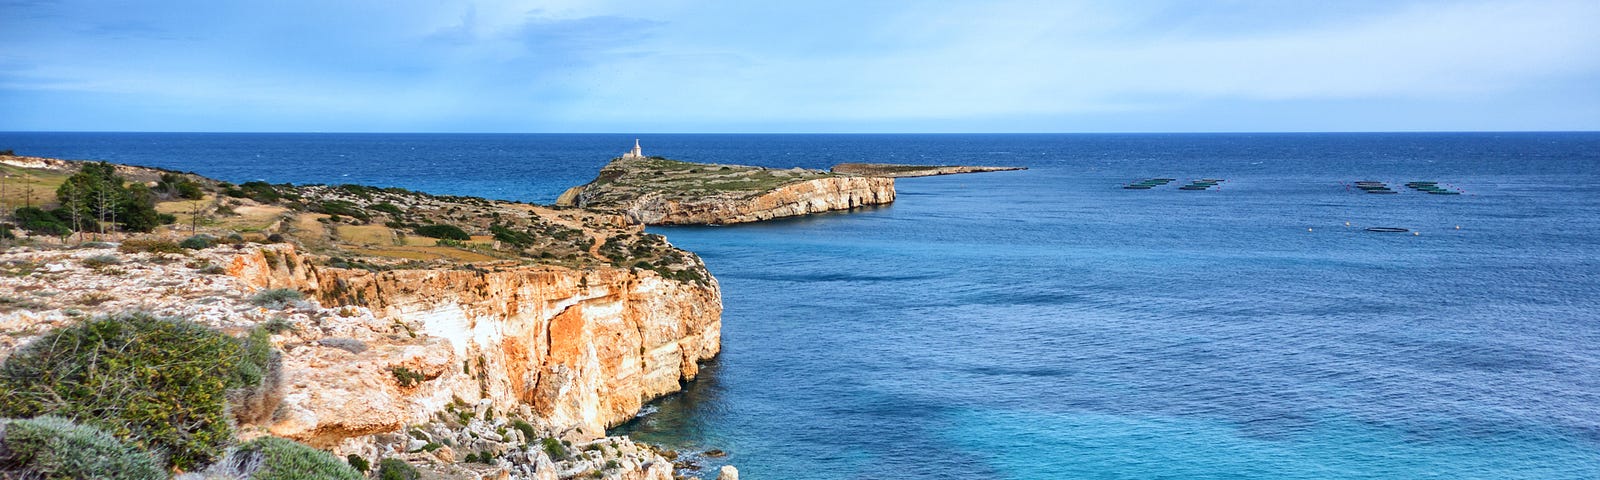 St. Paul’s Bay, Malta